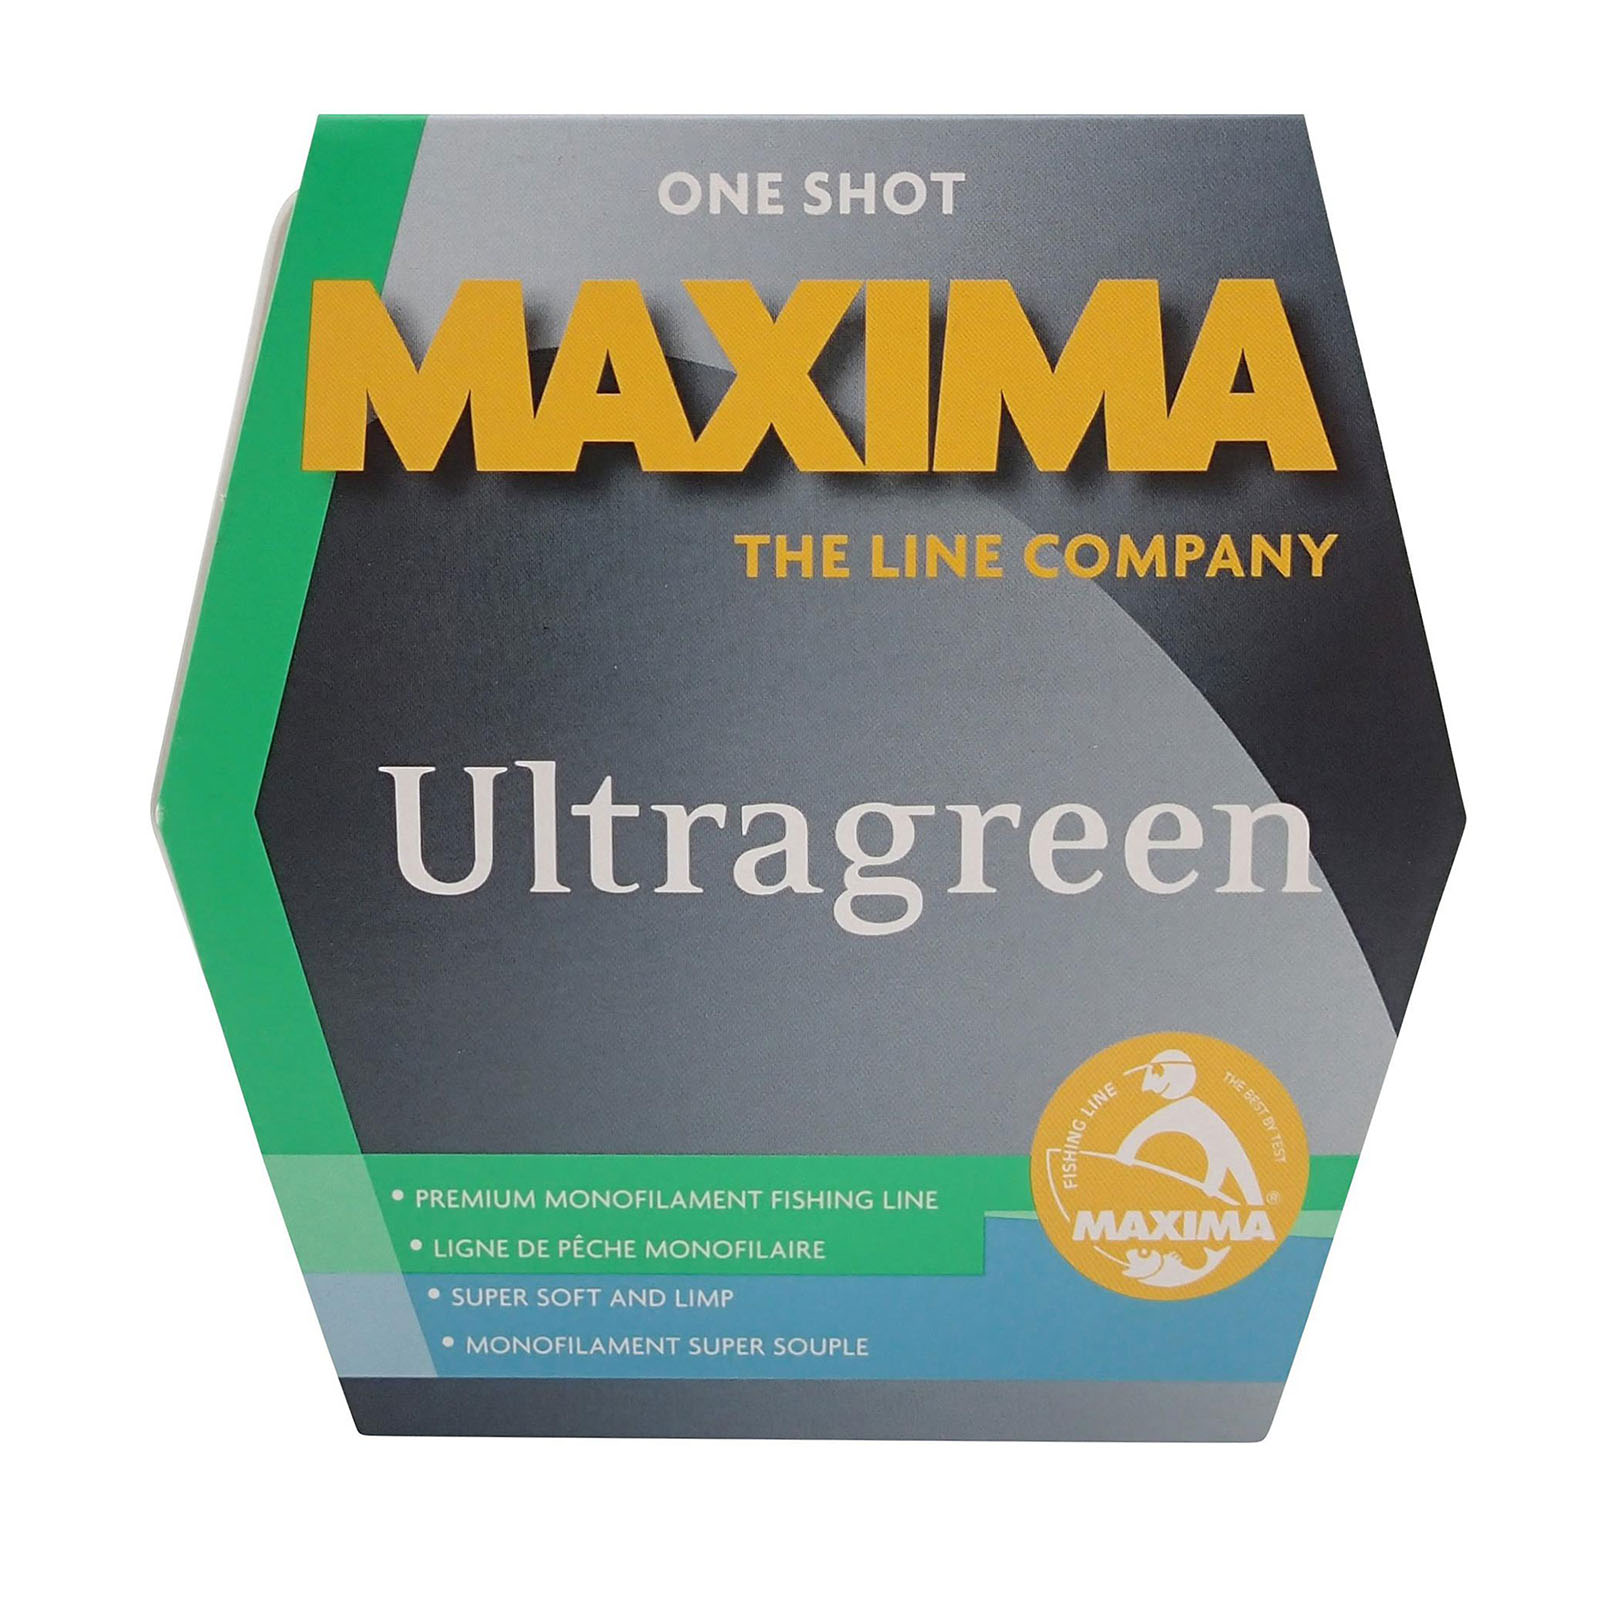 Maxima Fishing Line One Shot Spool, Ultragreen, 3-Pound/280-Yard